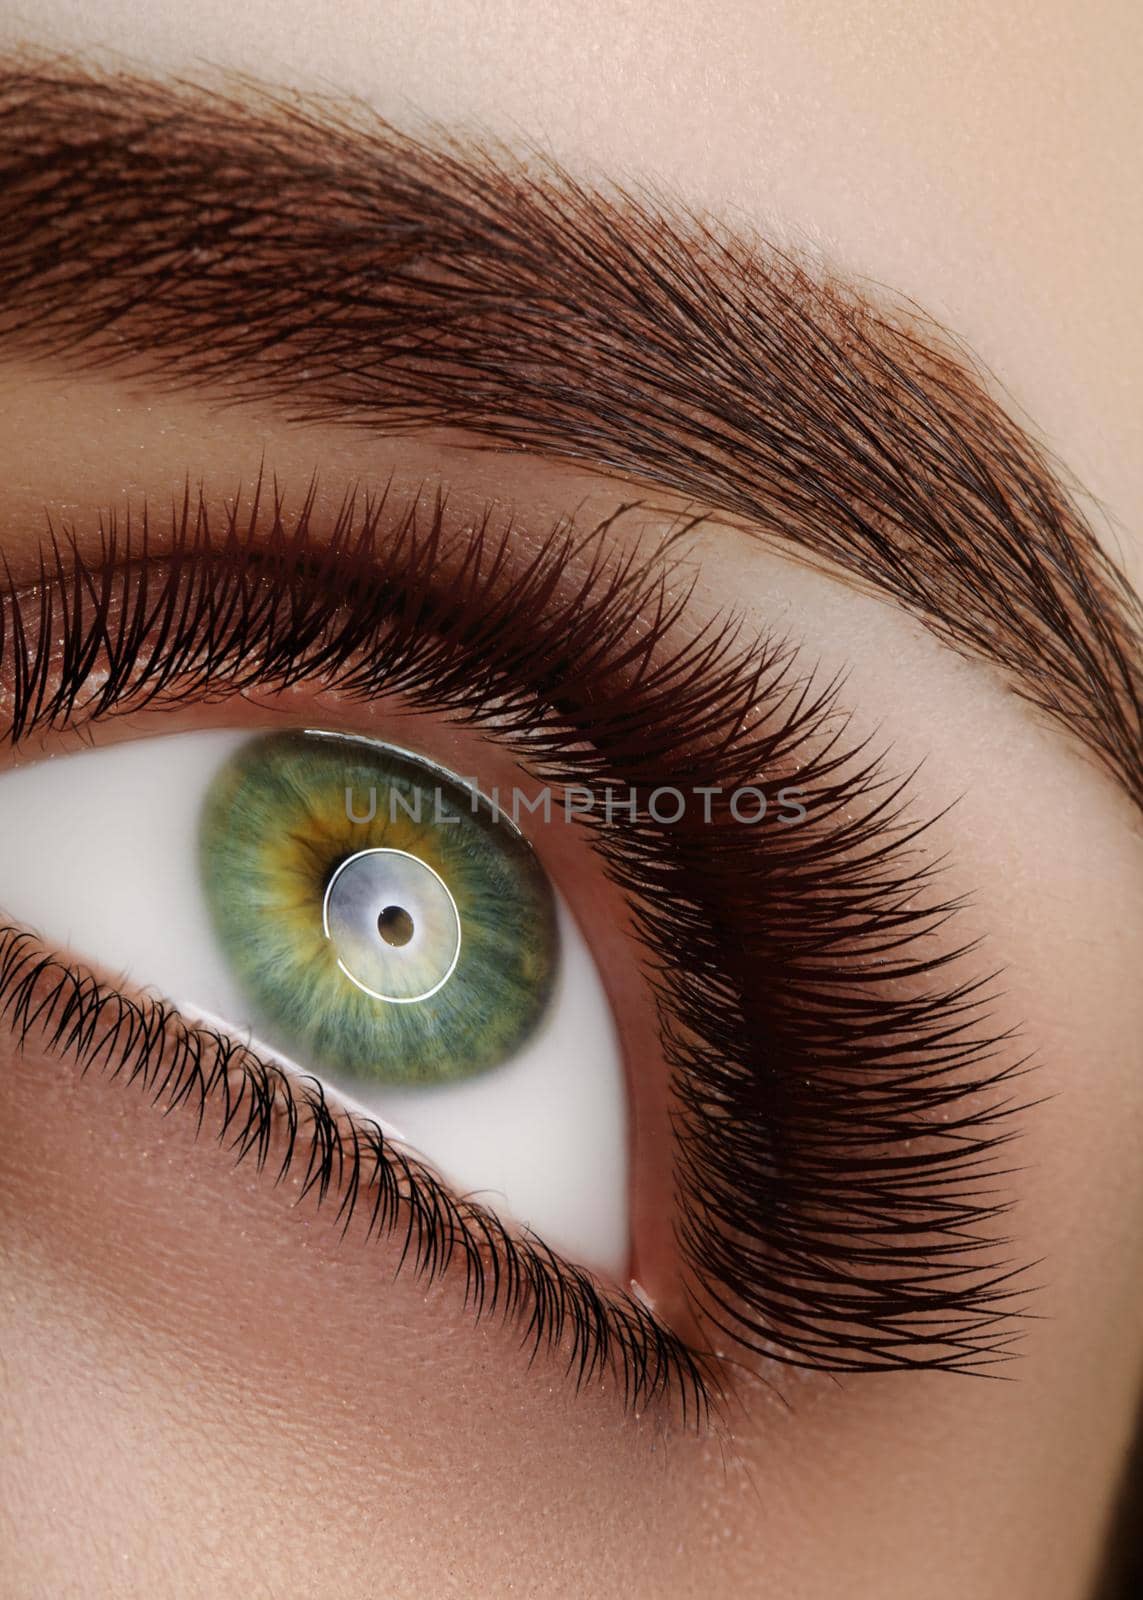 Close-up macro beautiful female eye with extreme long eyelashes, perfect shapes of eyebrows. Lash design, natural health lashes. Clean vision